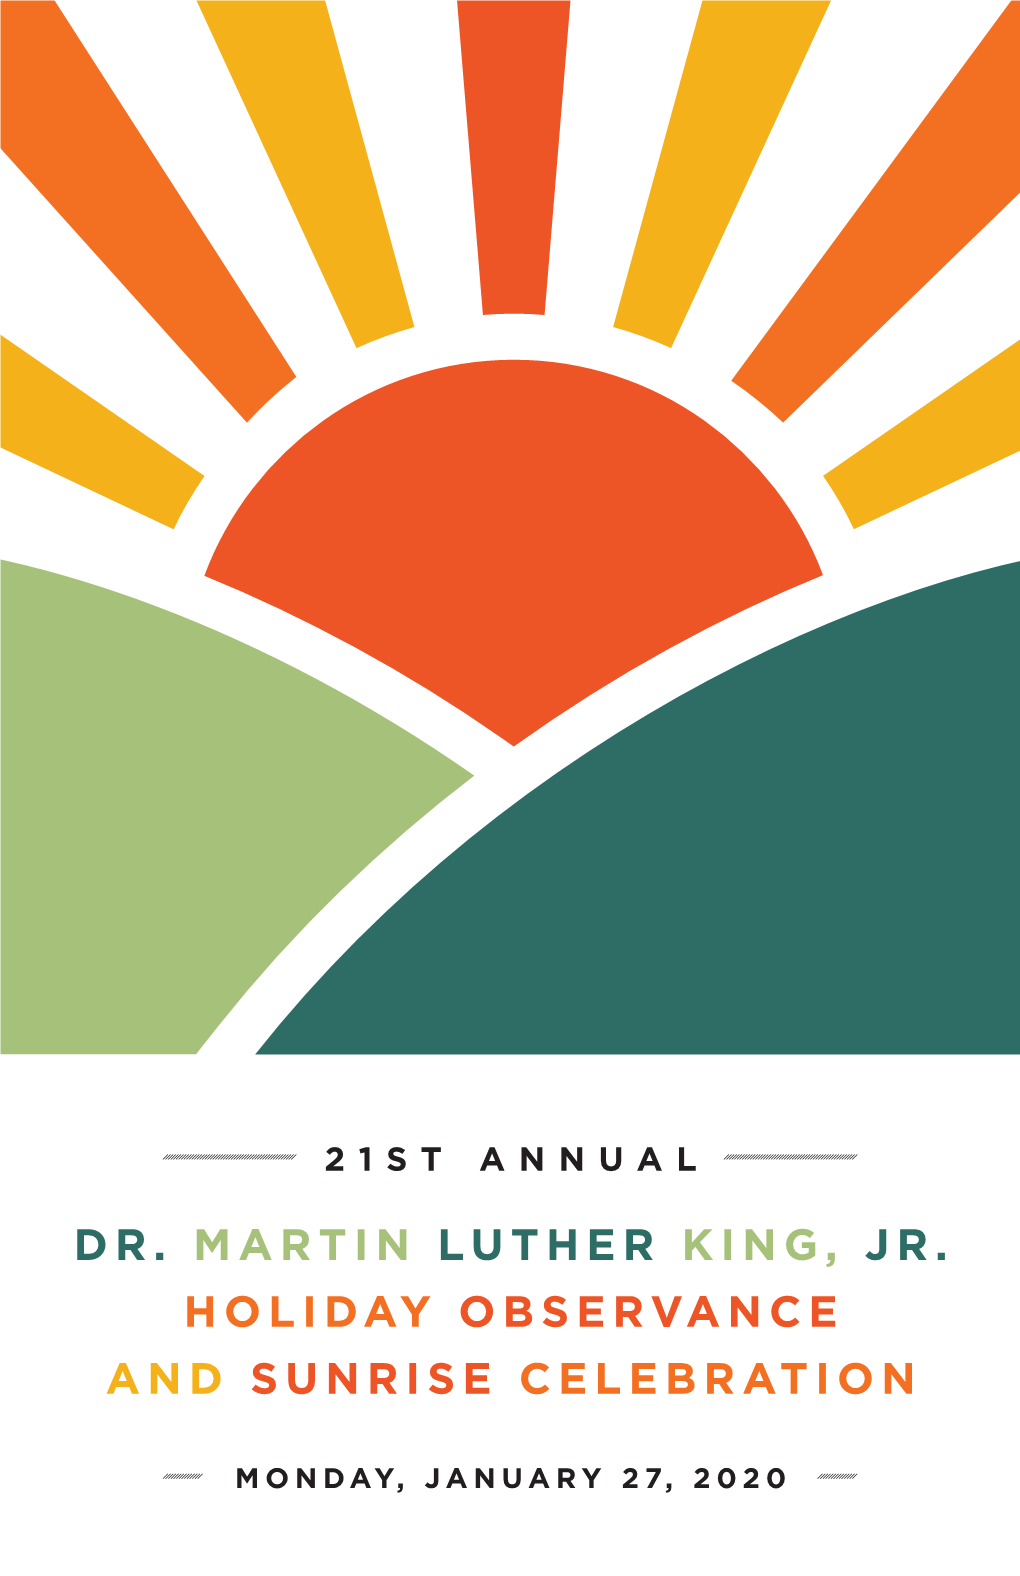 Dr. Martin Luther King, Jr. Holiday Observance and Sunrise Celebration